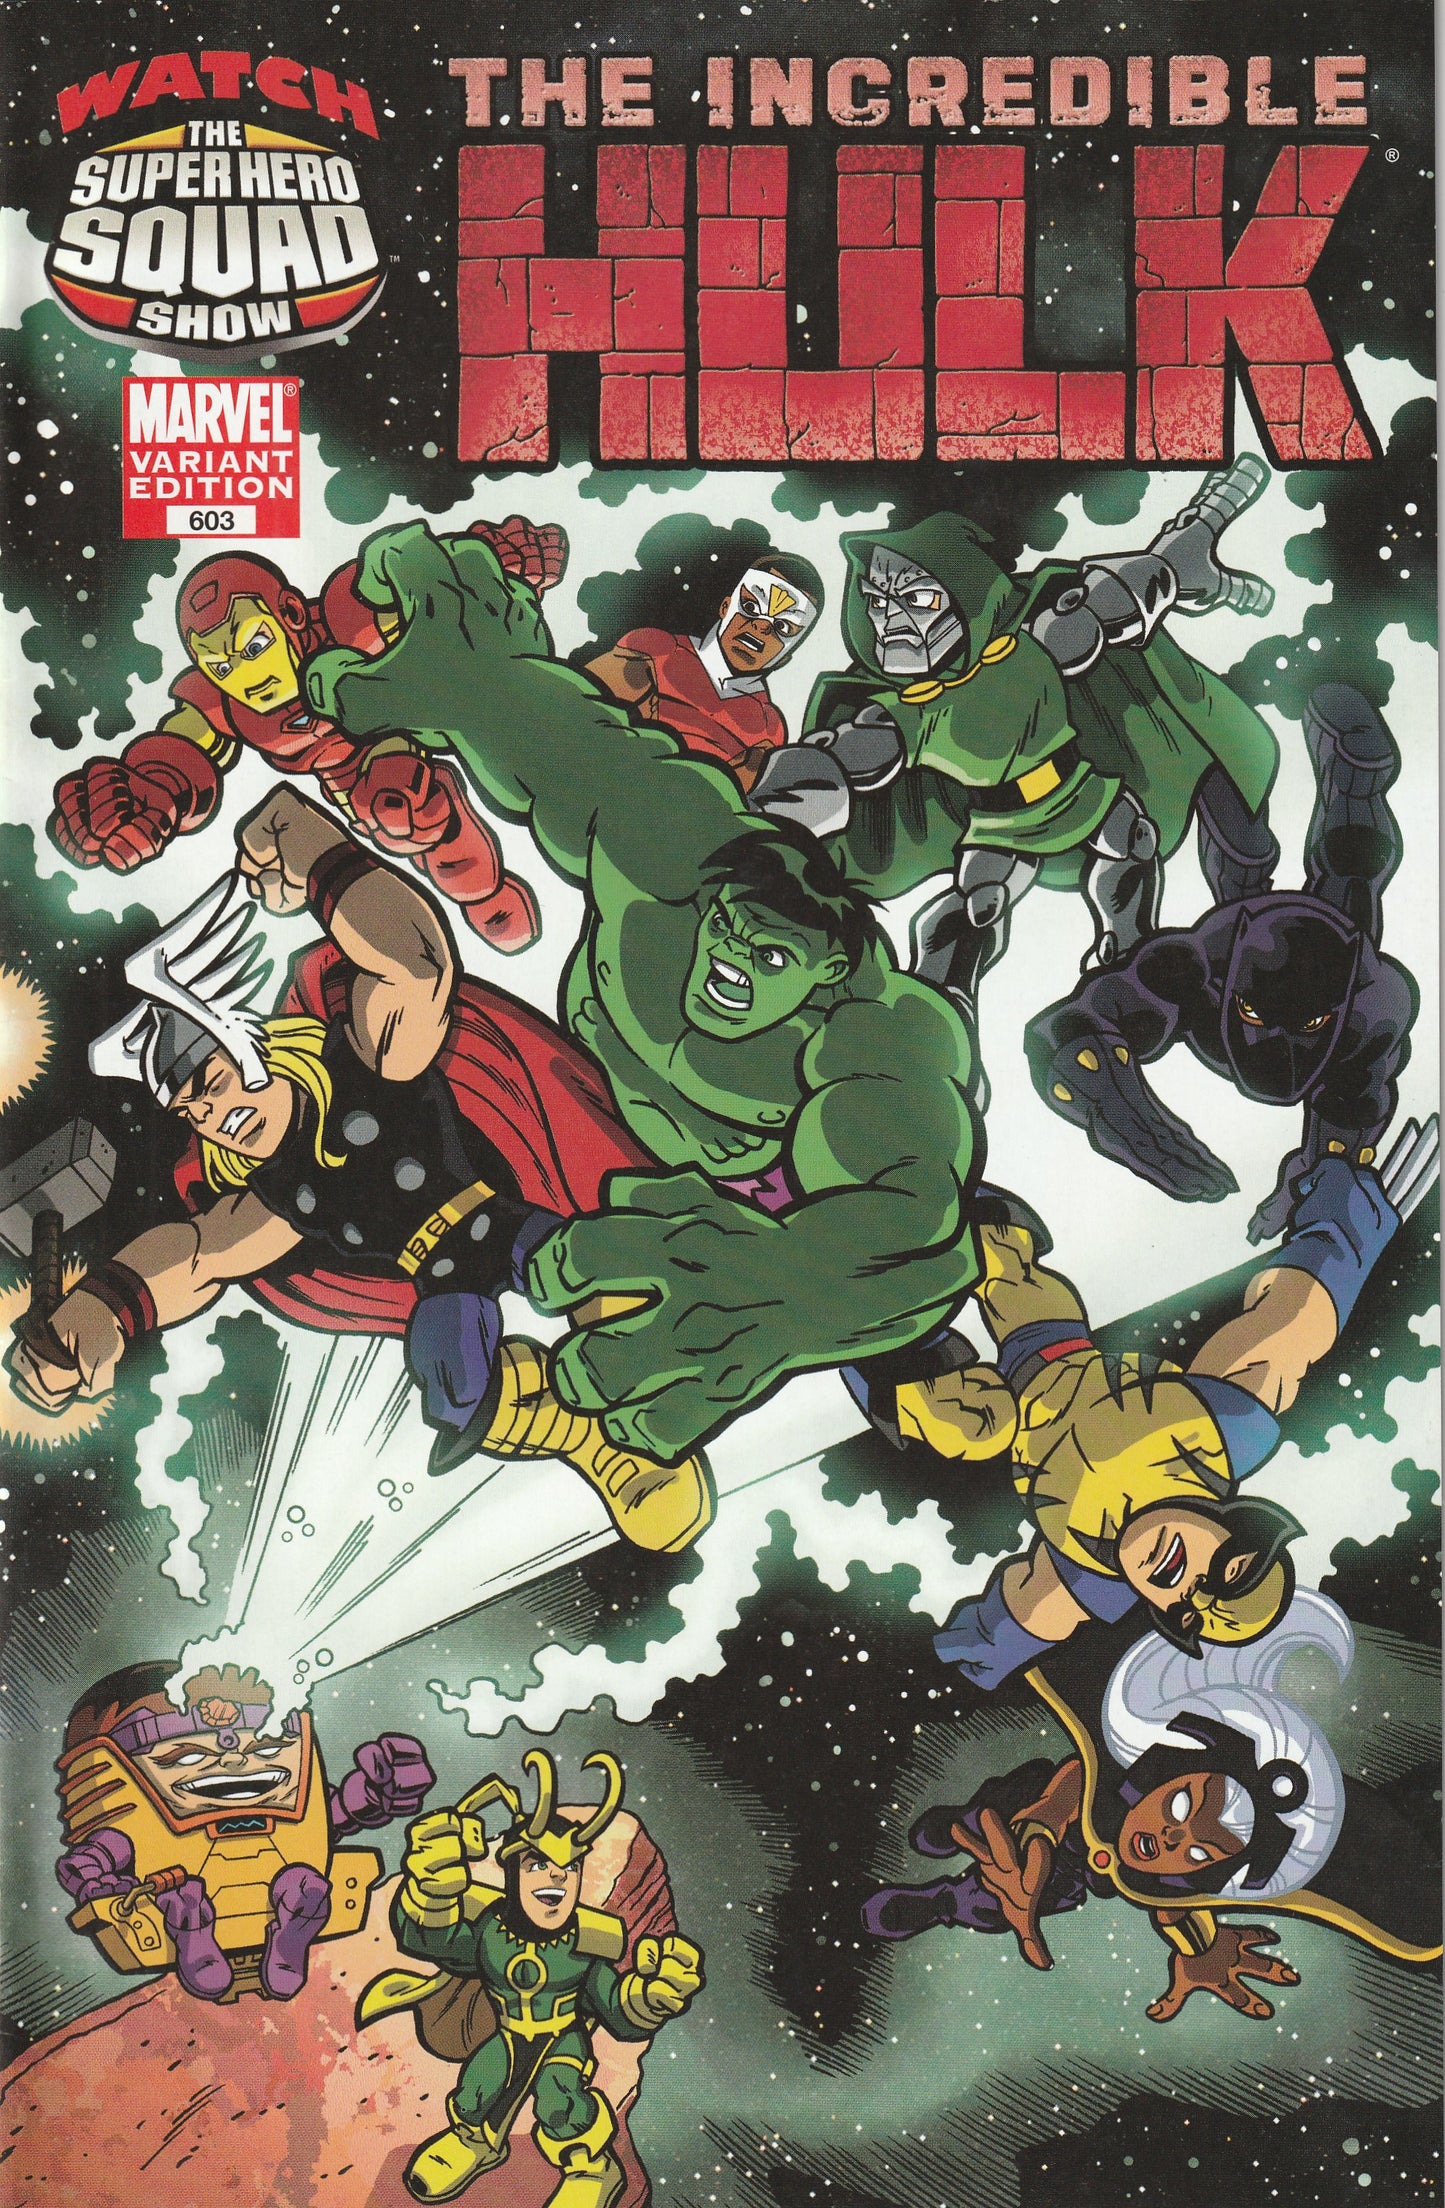 Incredible Hulk #603 (2009) - Marvel Super Hero Squad Variant 1:15 Ratio